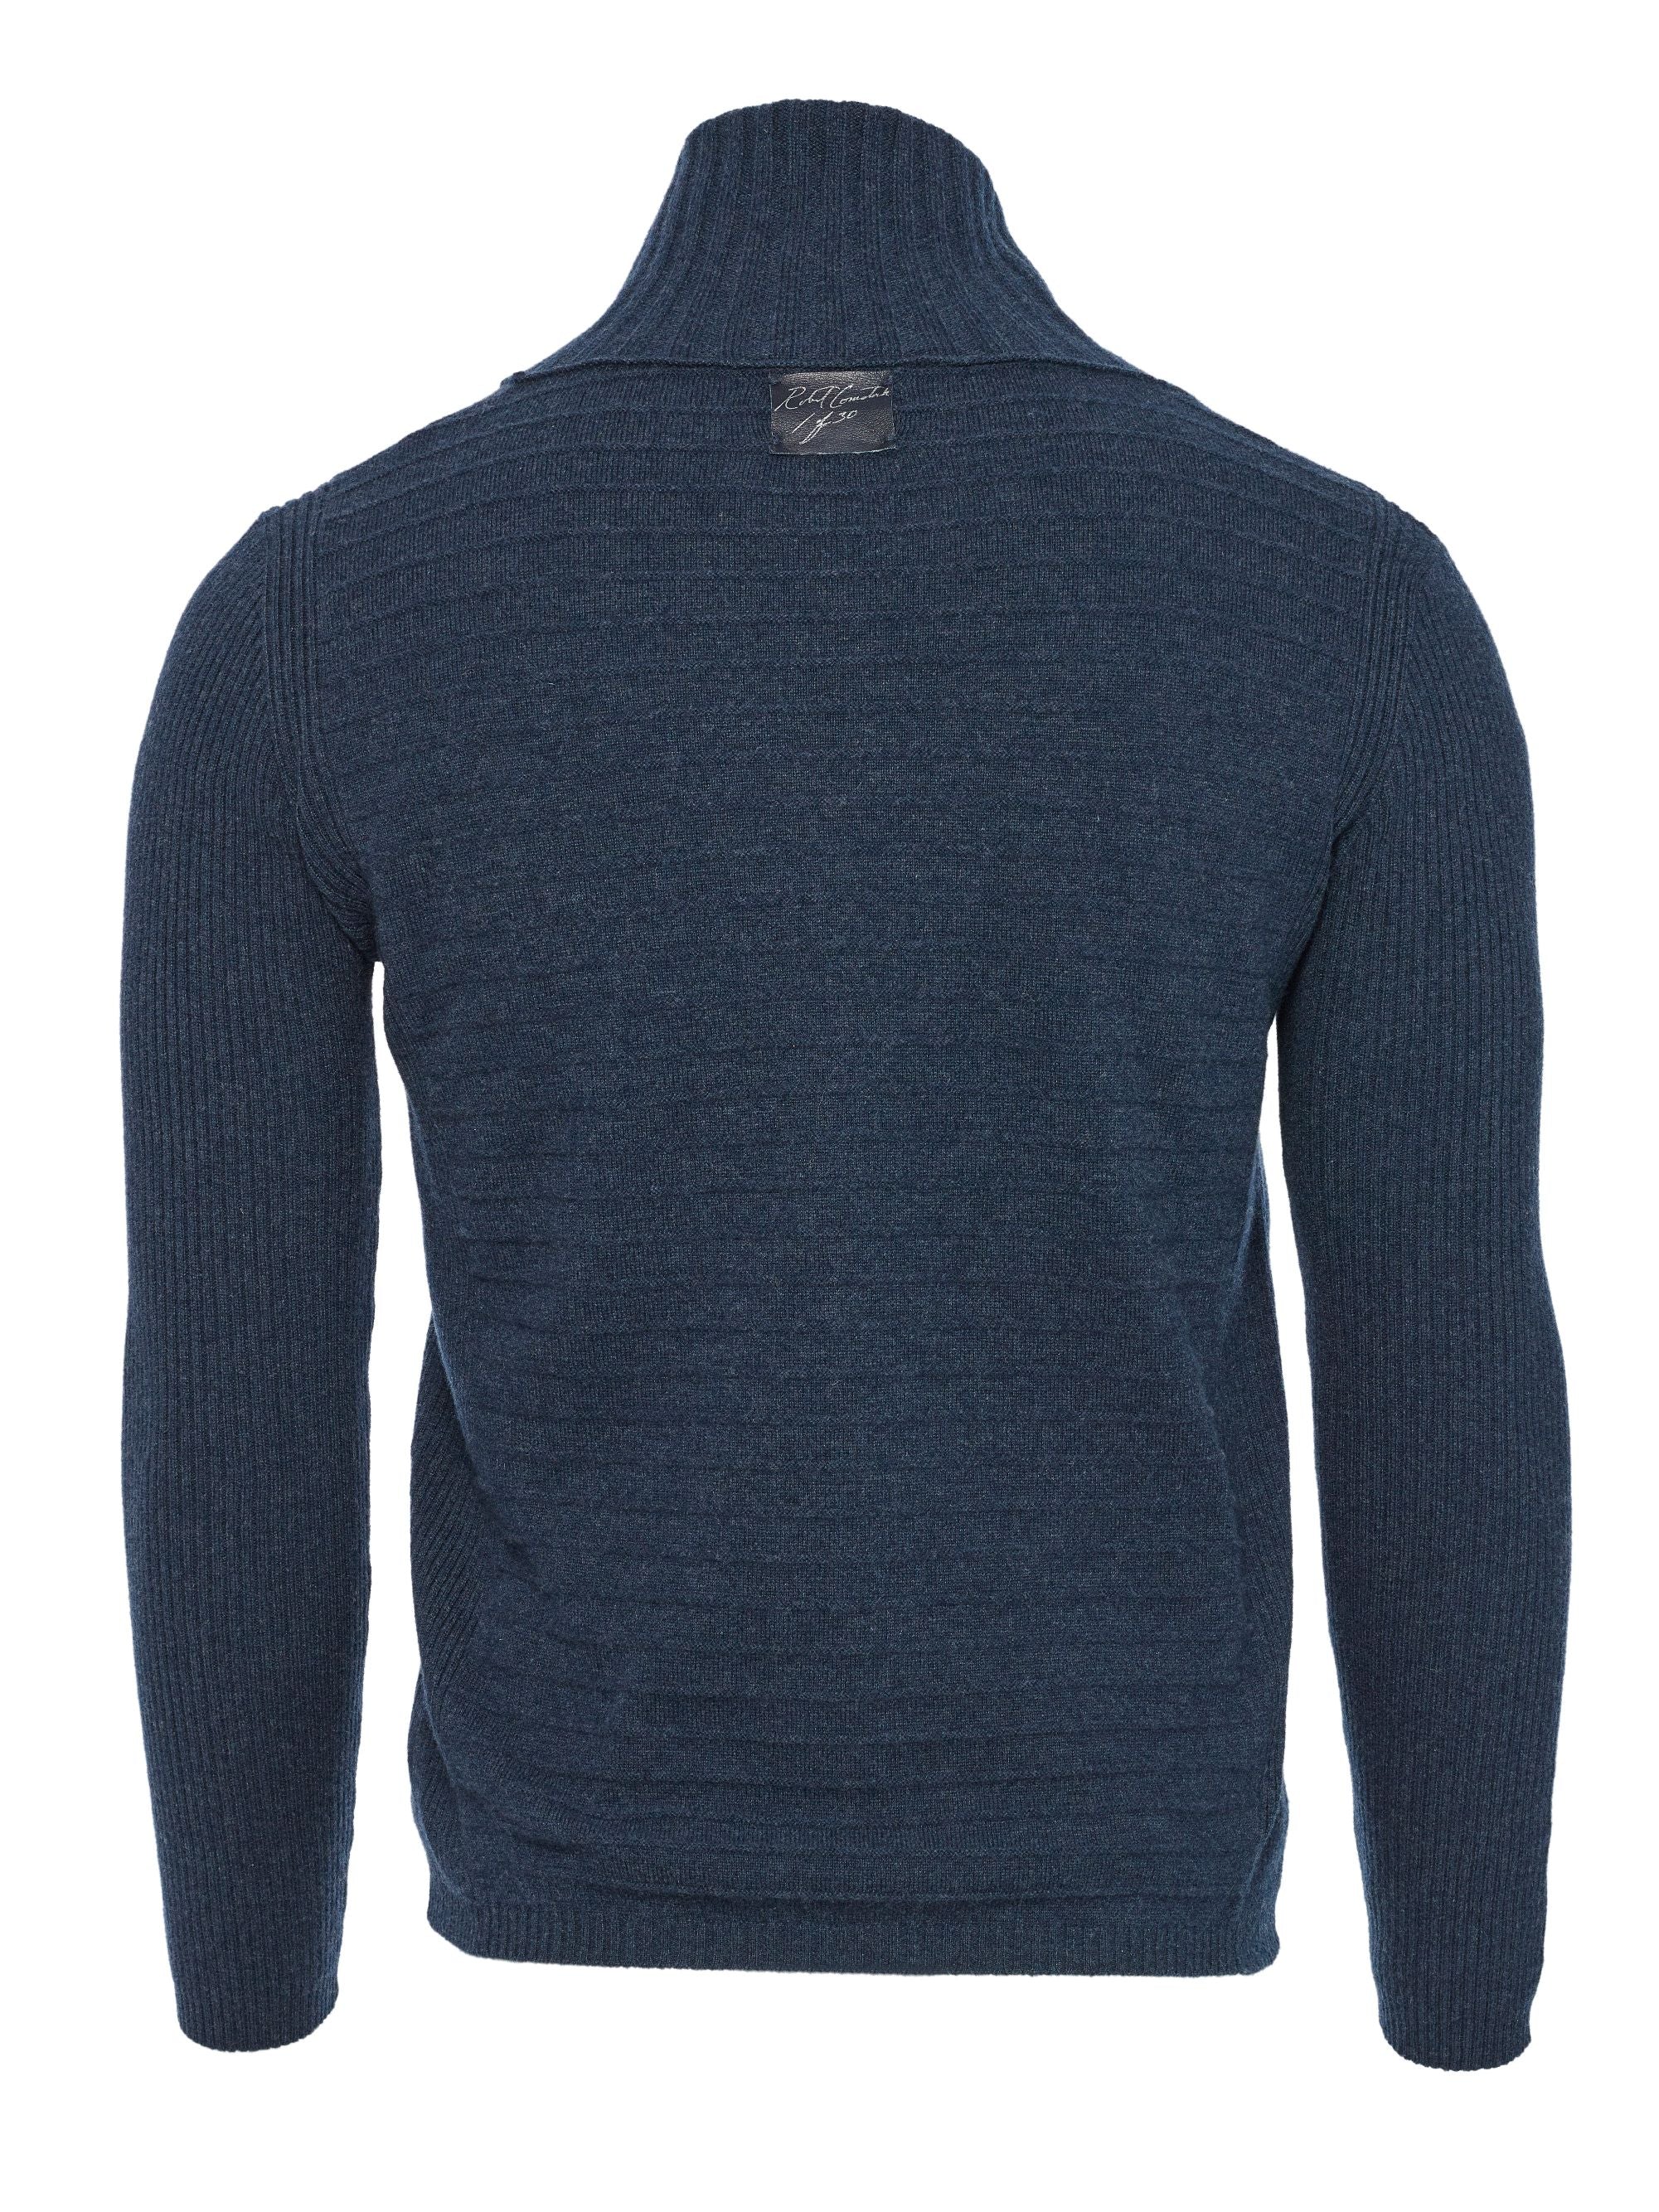 Back view twelve-gauge cashmere 3-pattern sweater